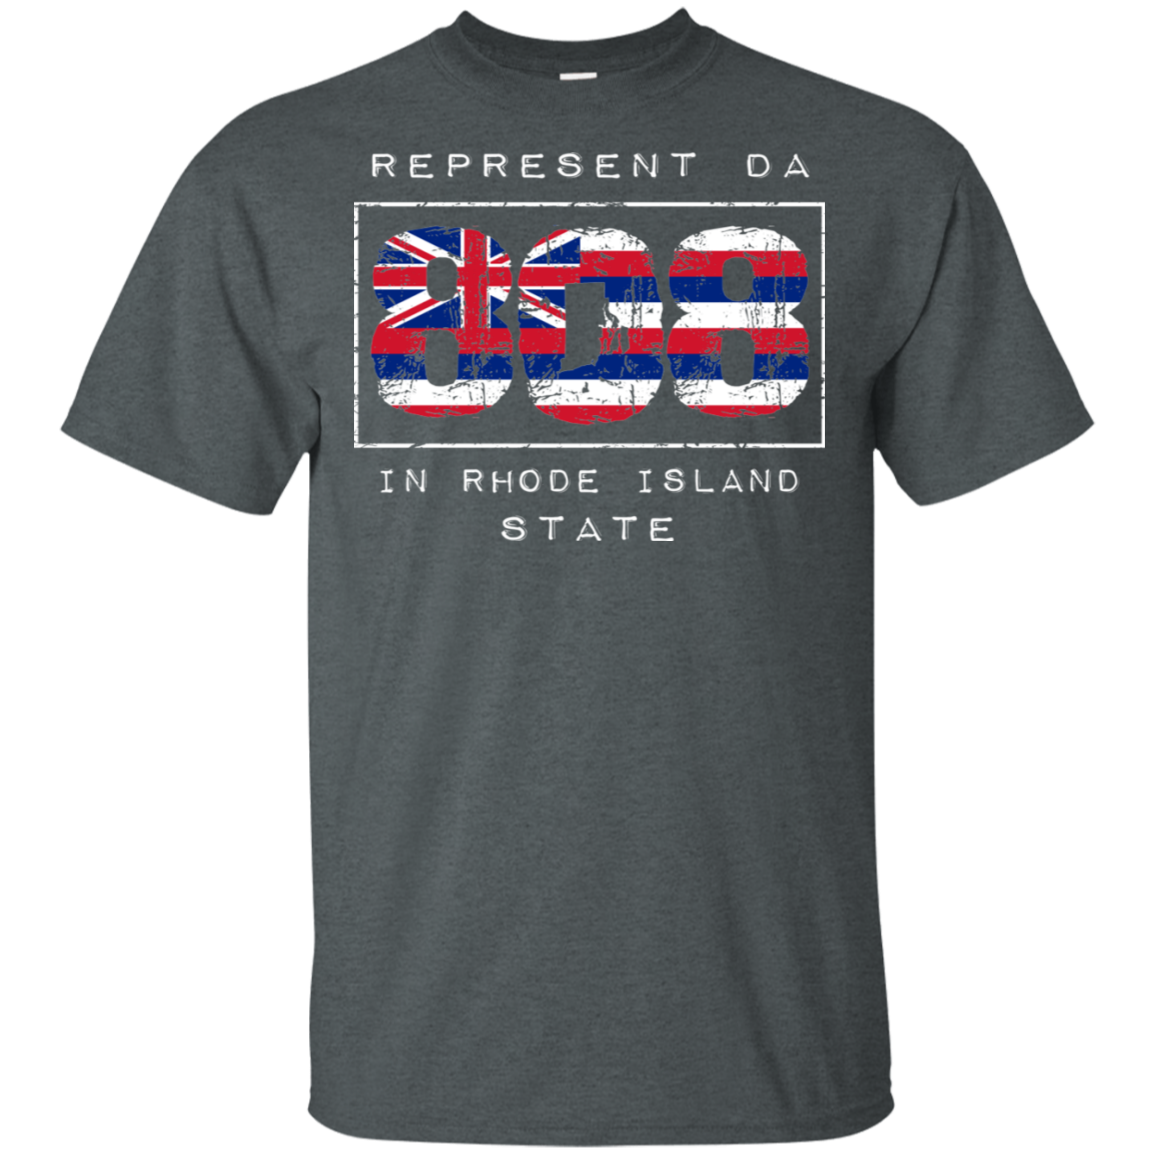 Rep Da 808 In Rhode Island State Ultra Cotton T-Shirt, T-Shirts, Hawaii Nei All Day